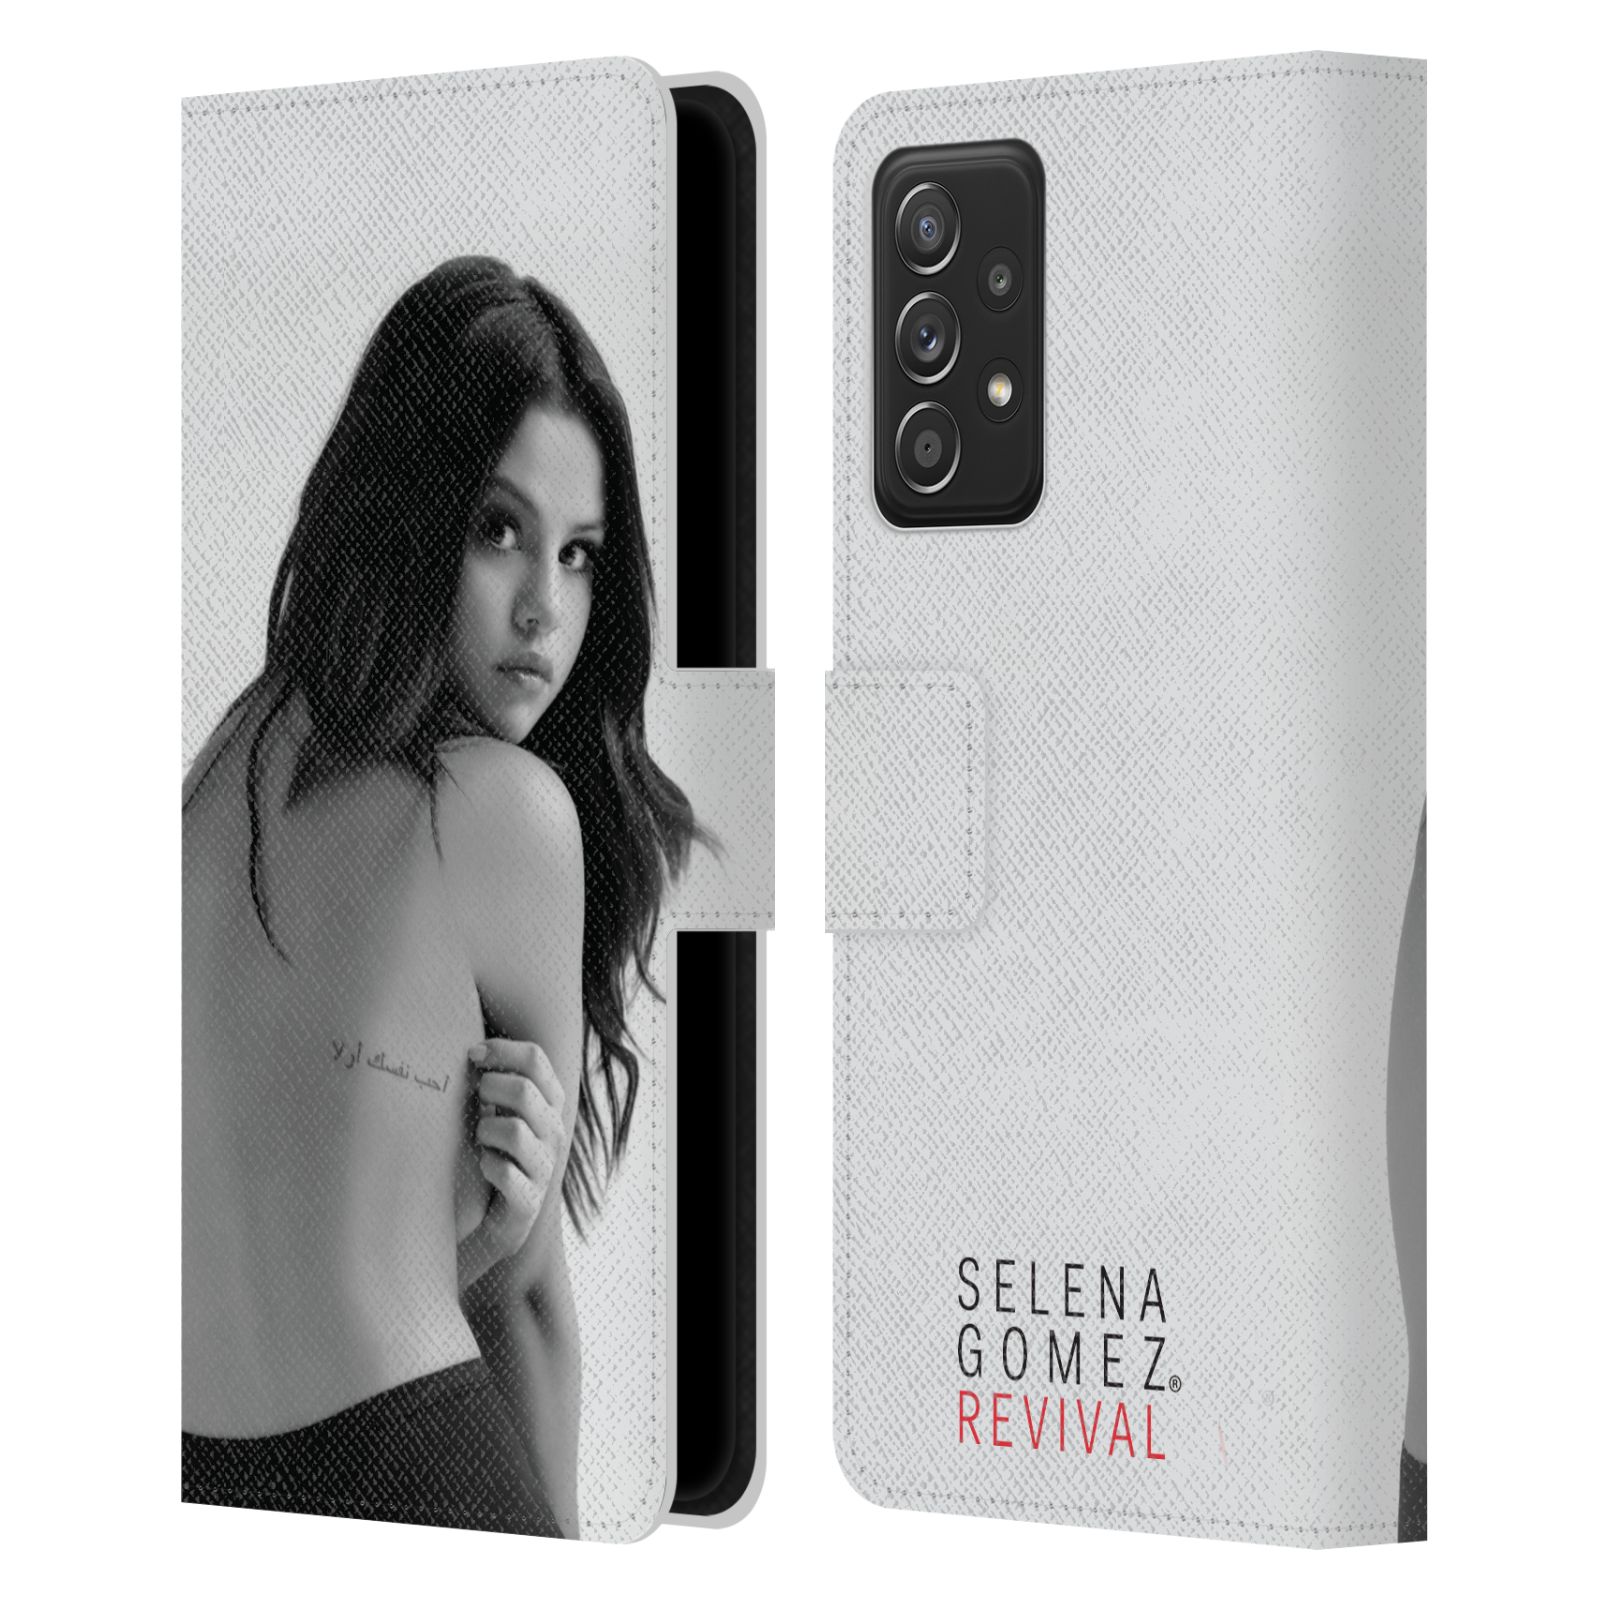 Pouzdro HEAD CASE na mobil Samsung Galaxy A52 / A52 5G / A52s 5G  Selena Gomez - foto pohled